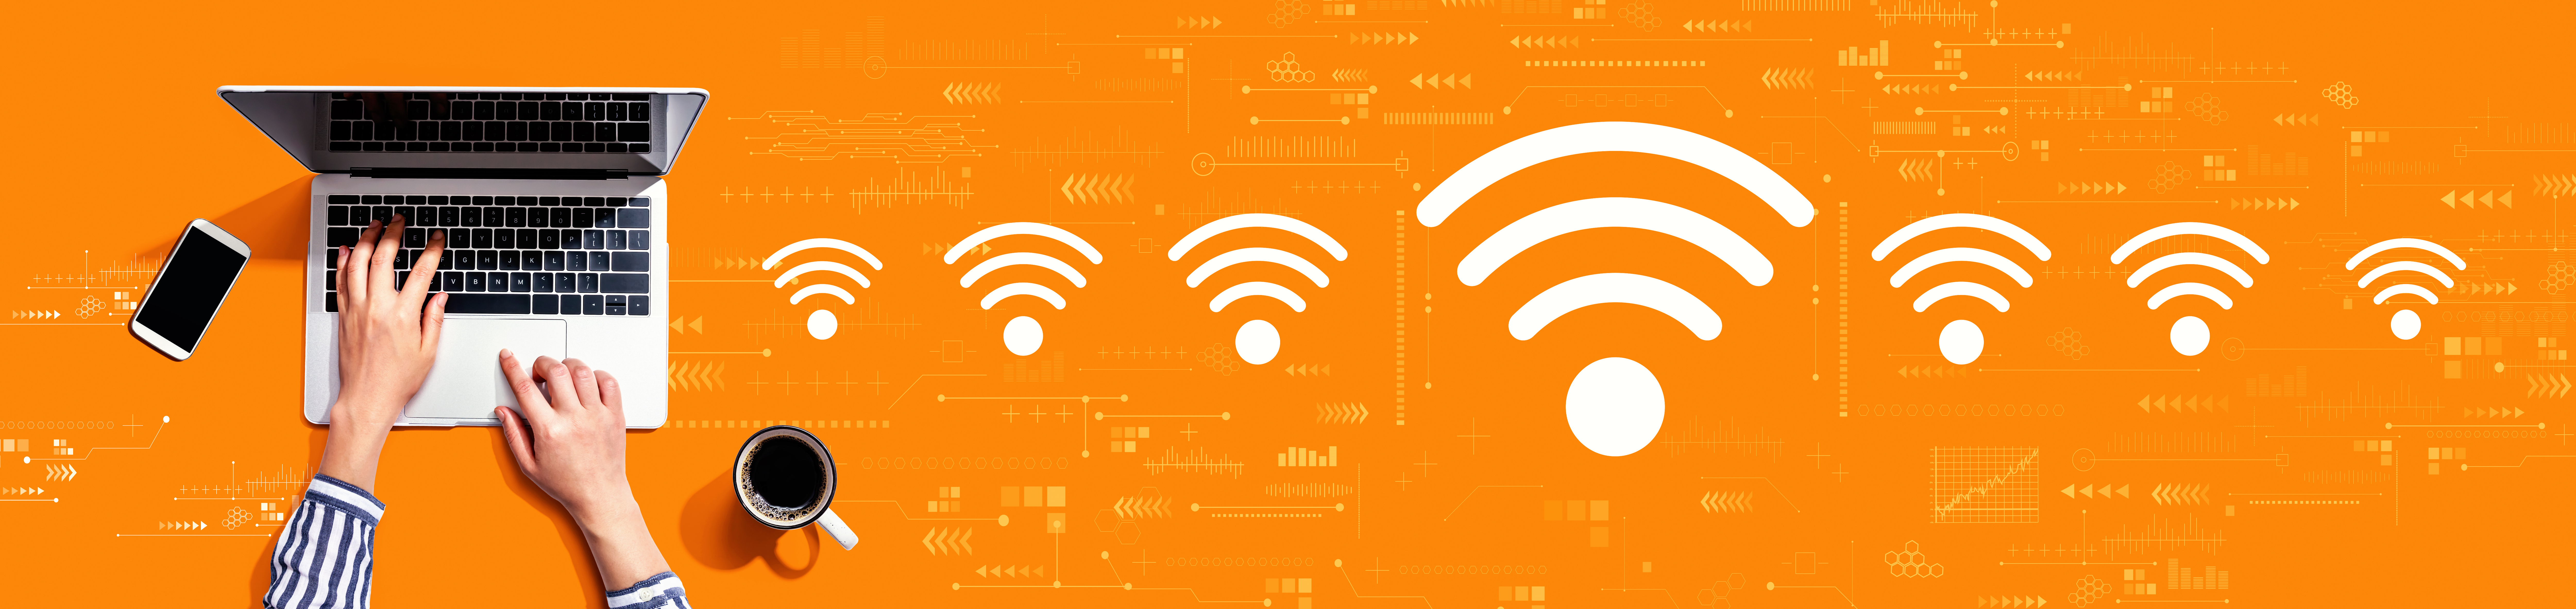 wi-fi & connectivity’